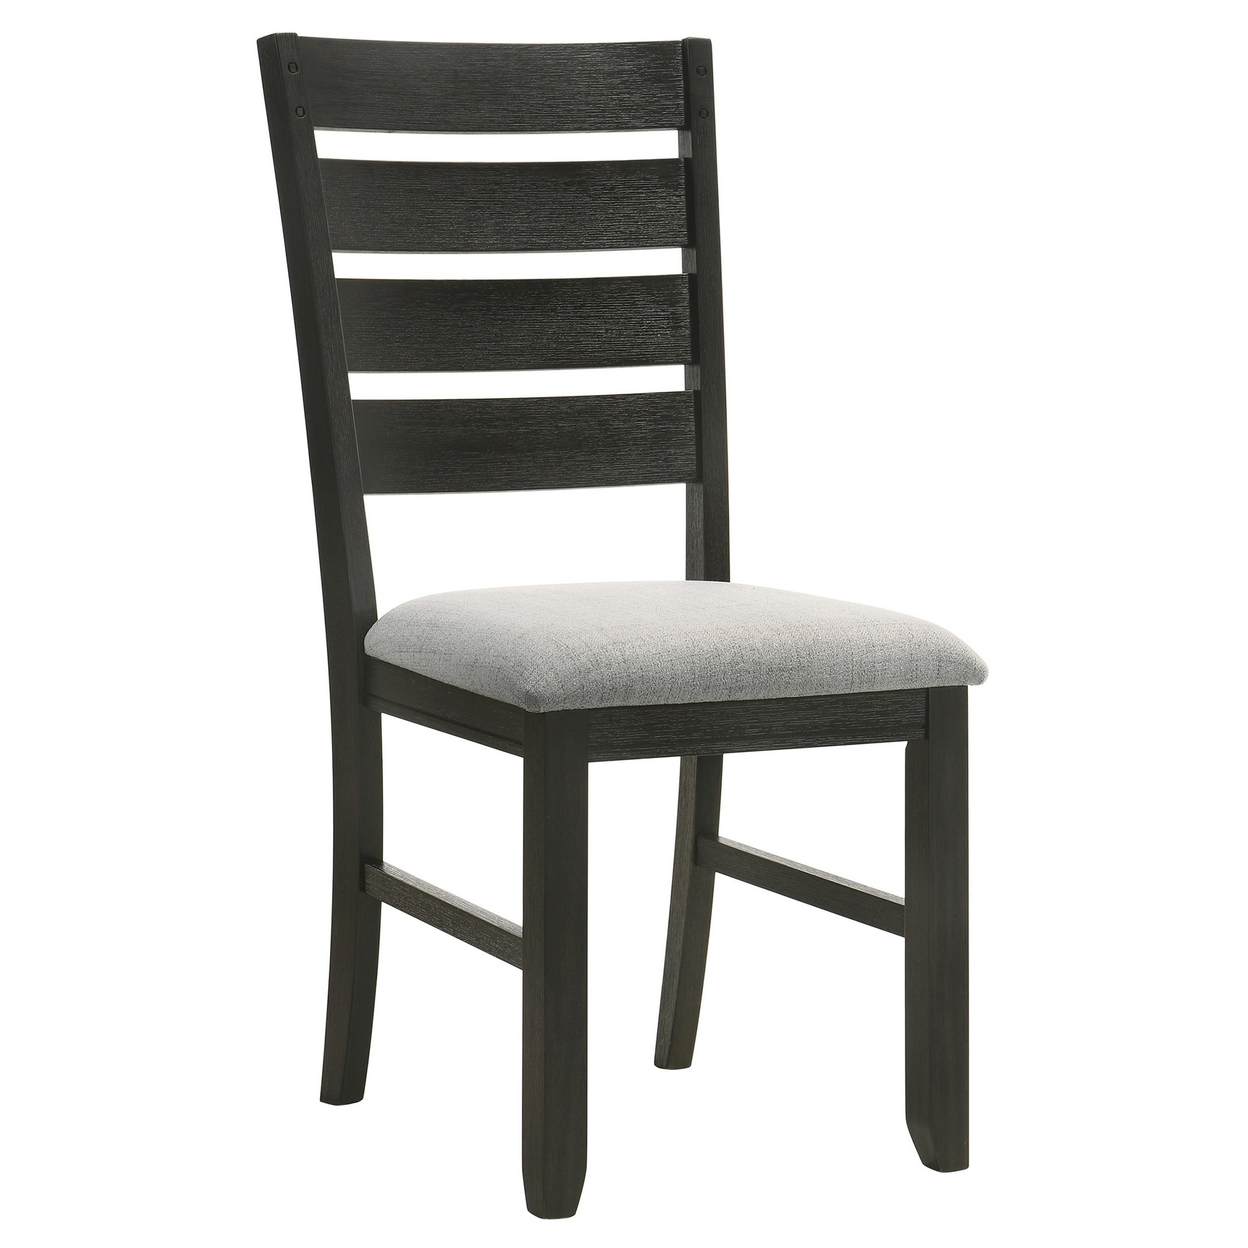 Woodlands 22 Inch Side Chair Set Of 2, Soft Gray Fabric Seat, Brown Wood -Saltoro Sherpi